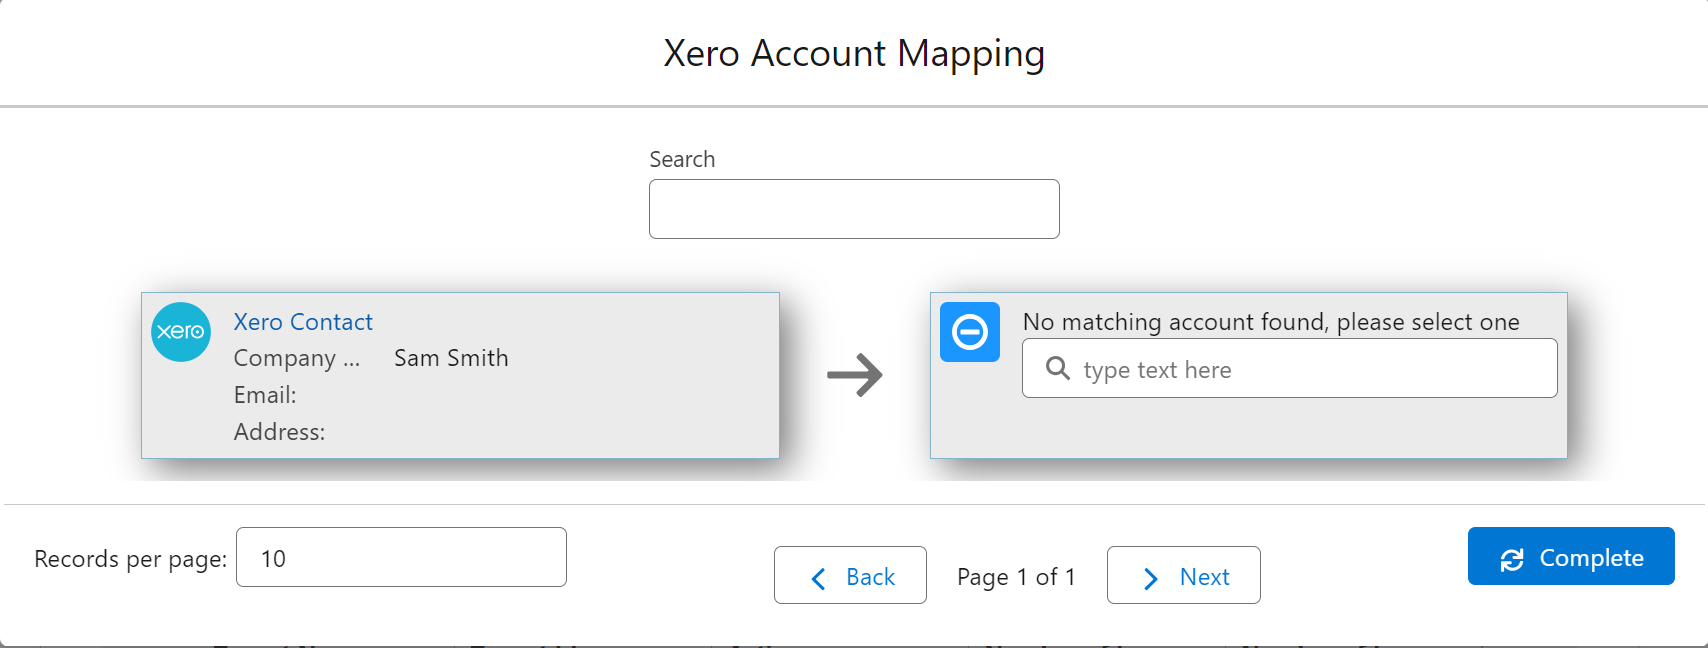 Xero Account Mapping